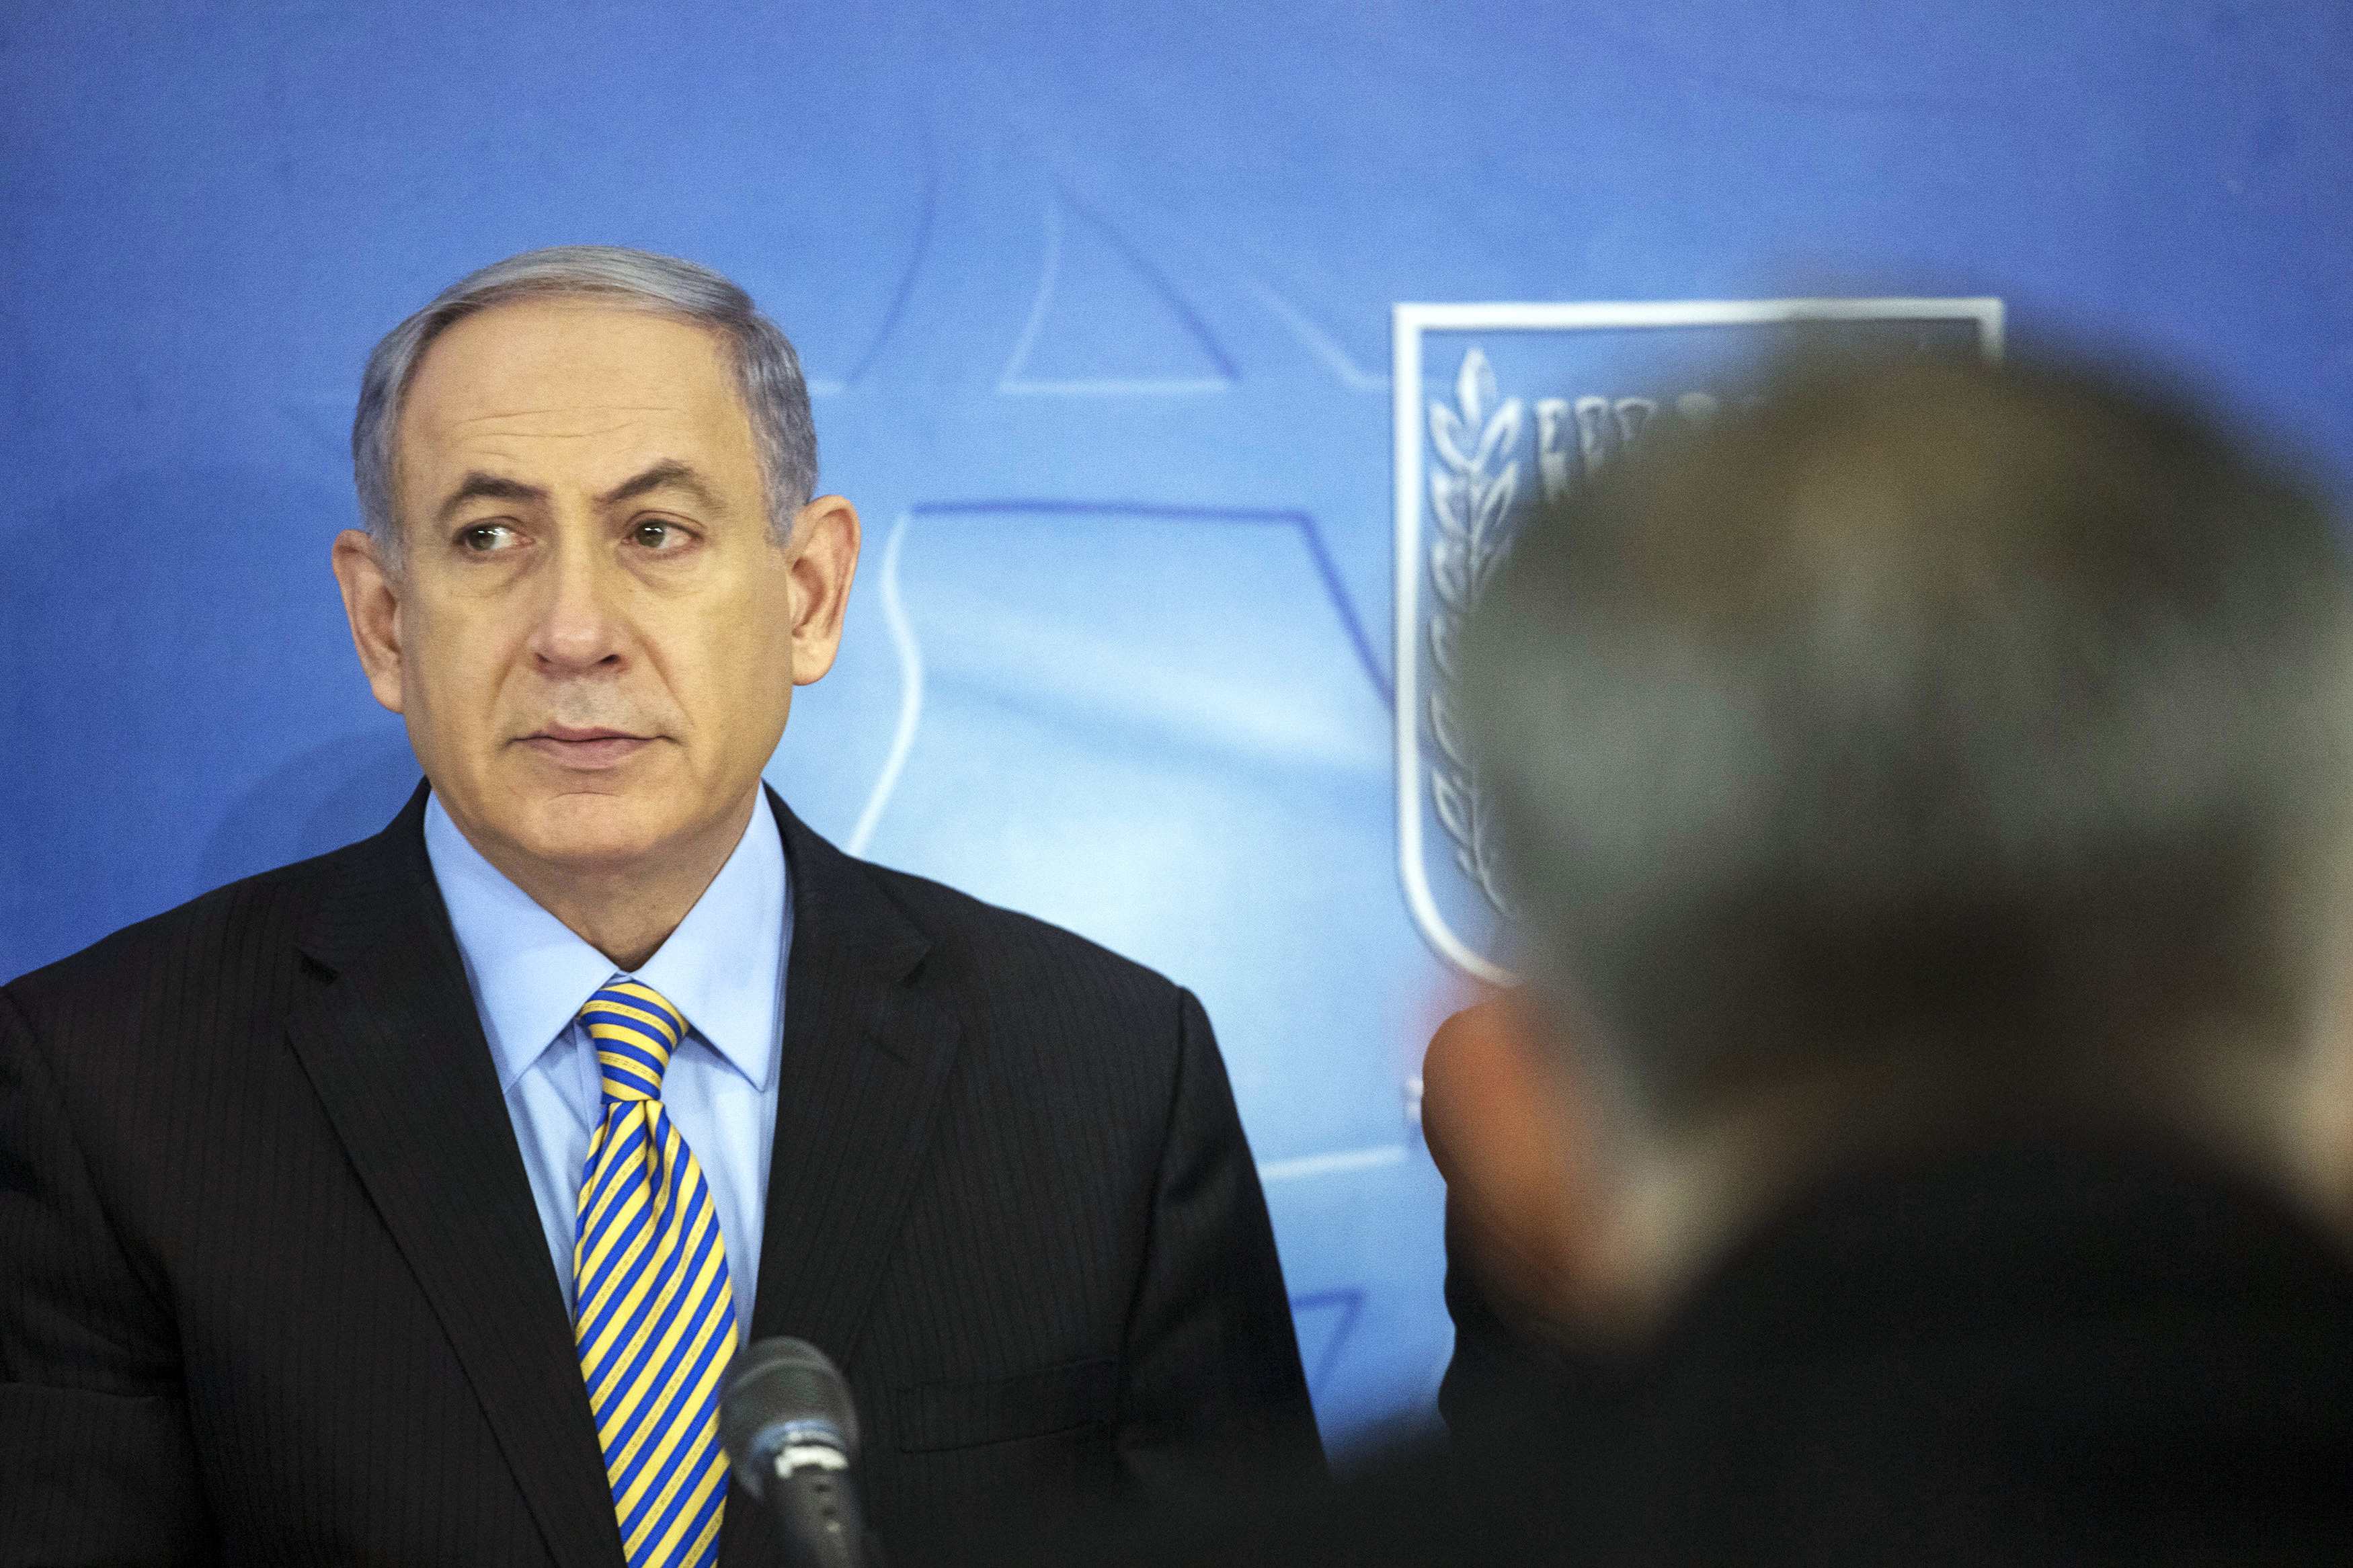 Israel to cut off Cairo truce talks under fire - Netanyahu